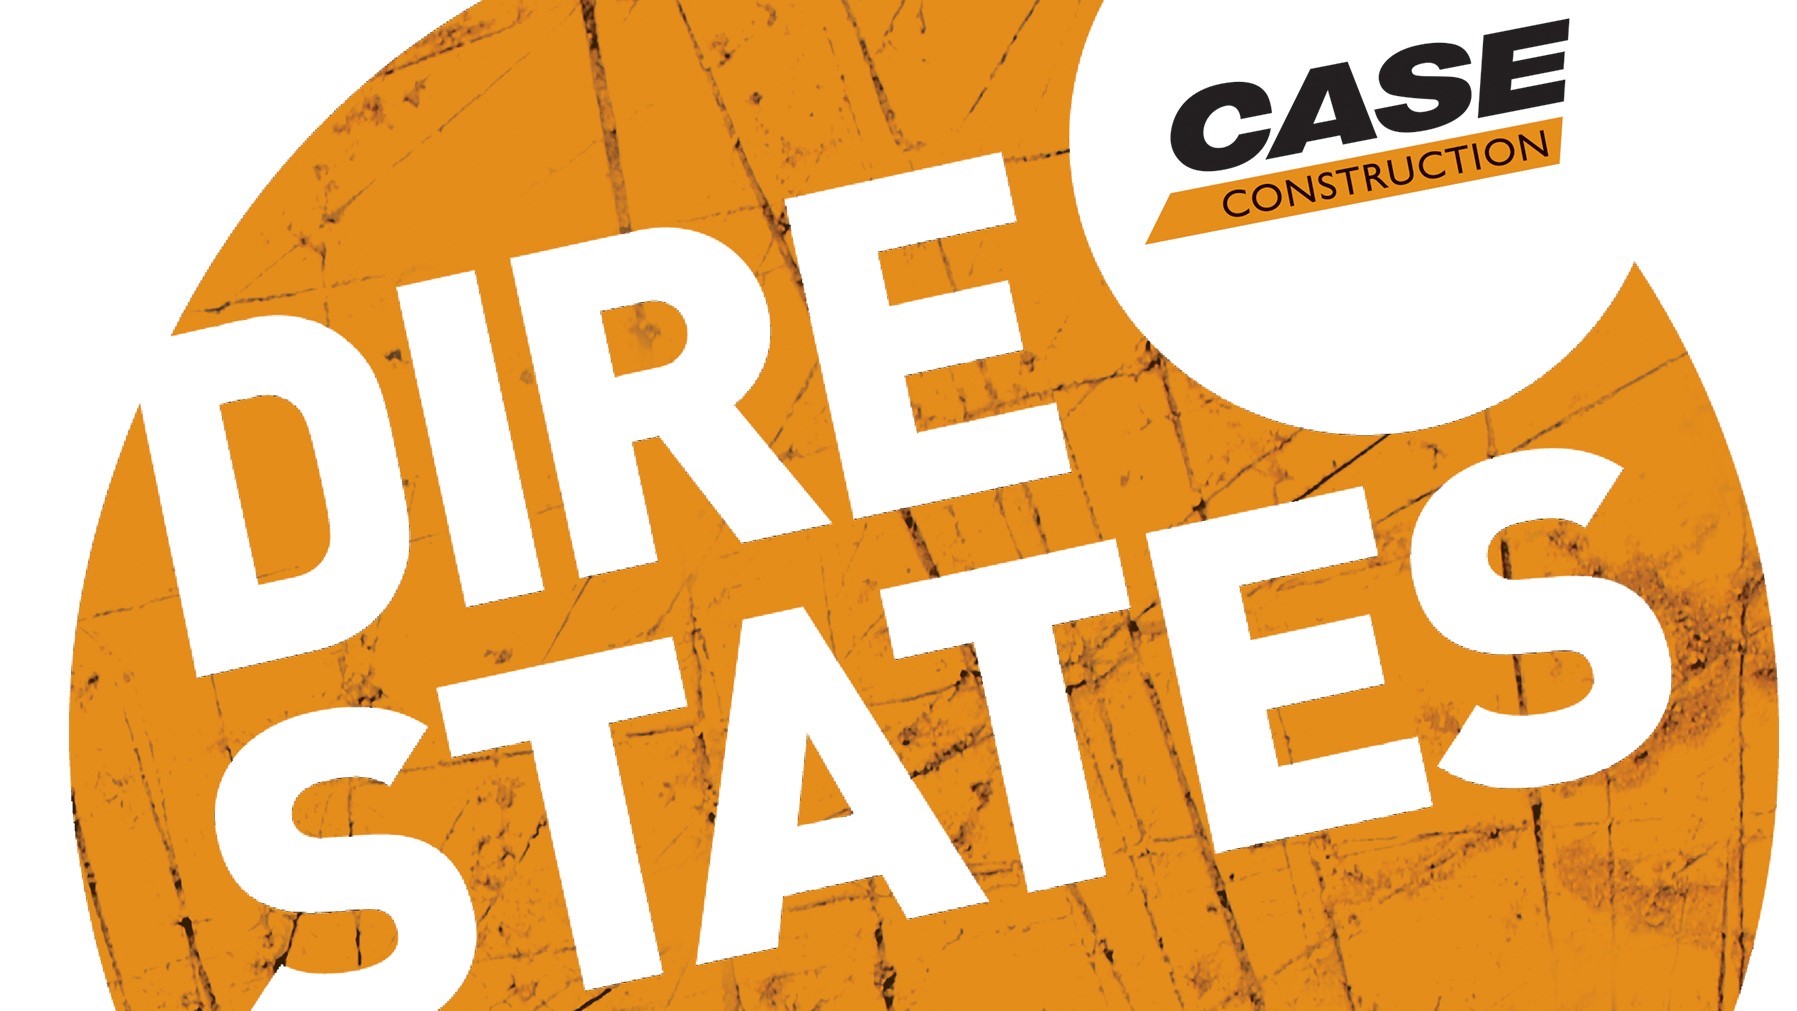 CASE Dire States logo